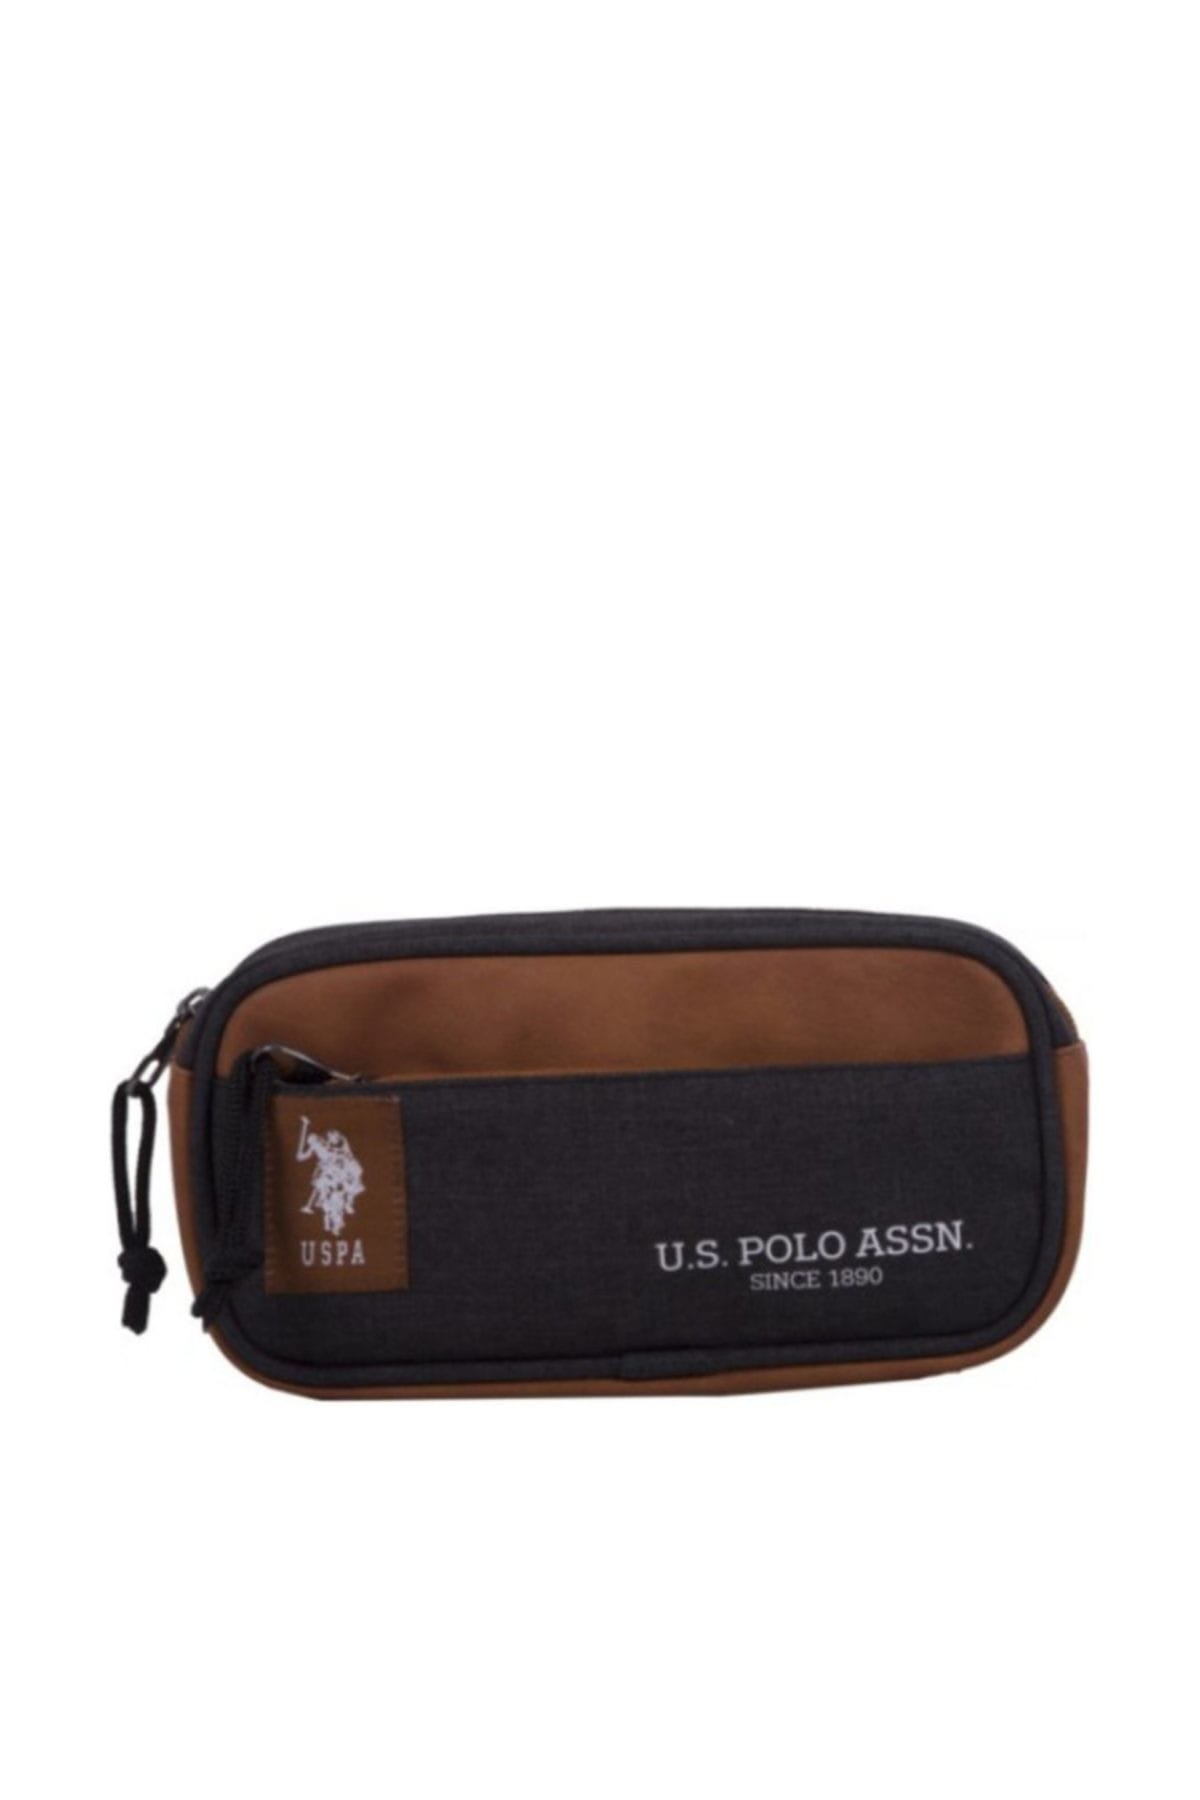 U.S. Polo Assn. Polo Kalem Çantası